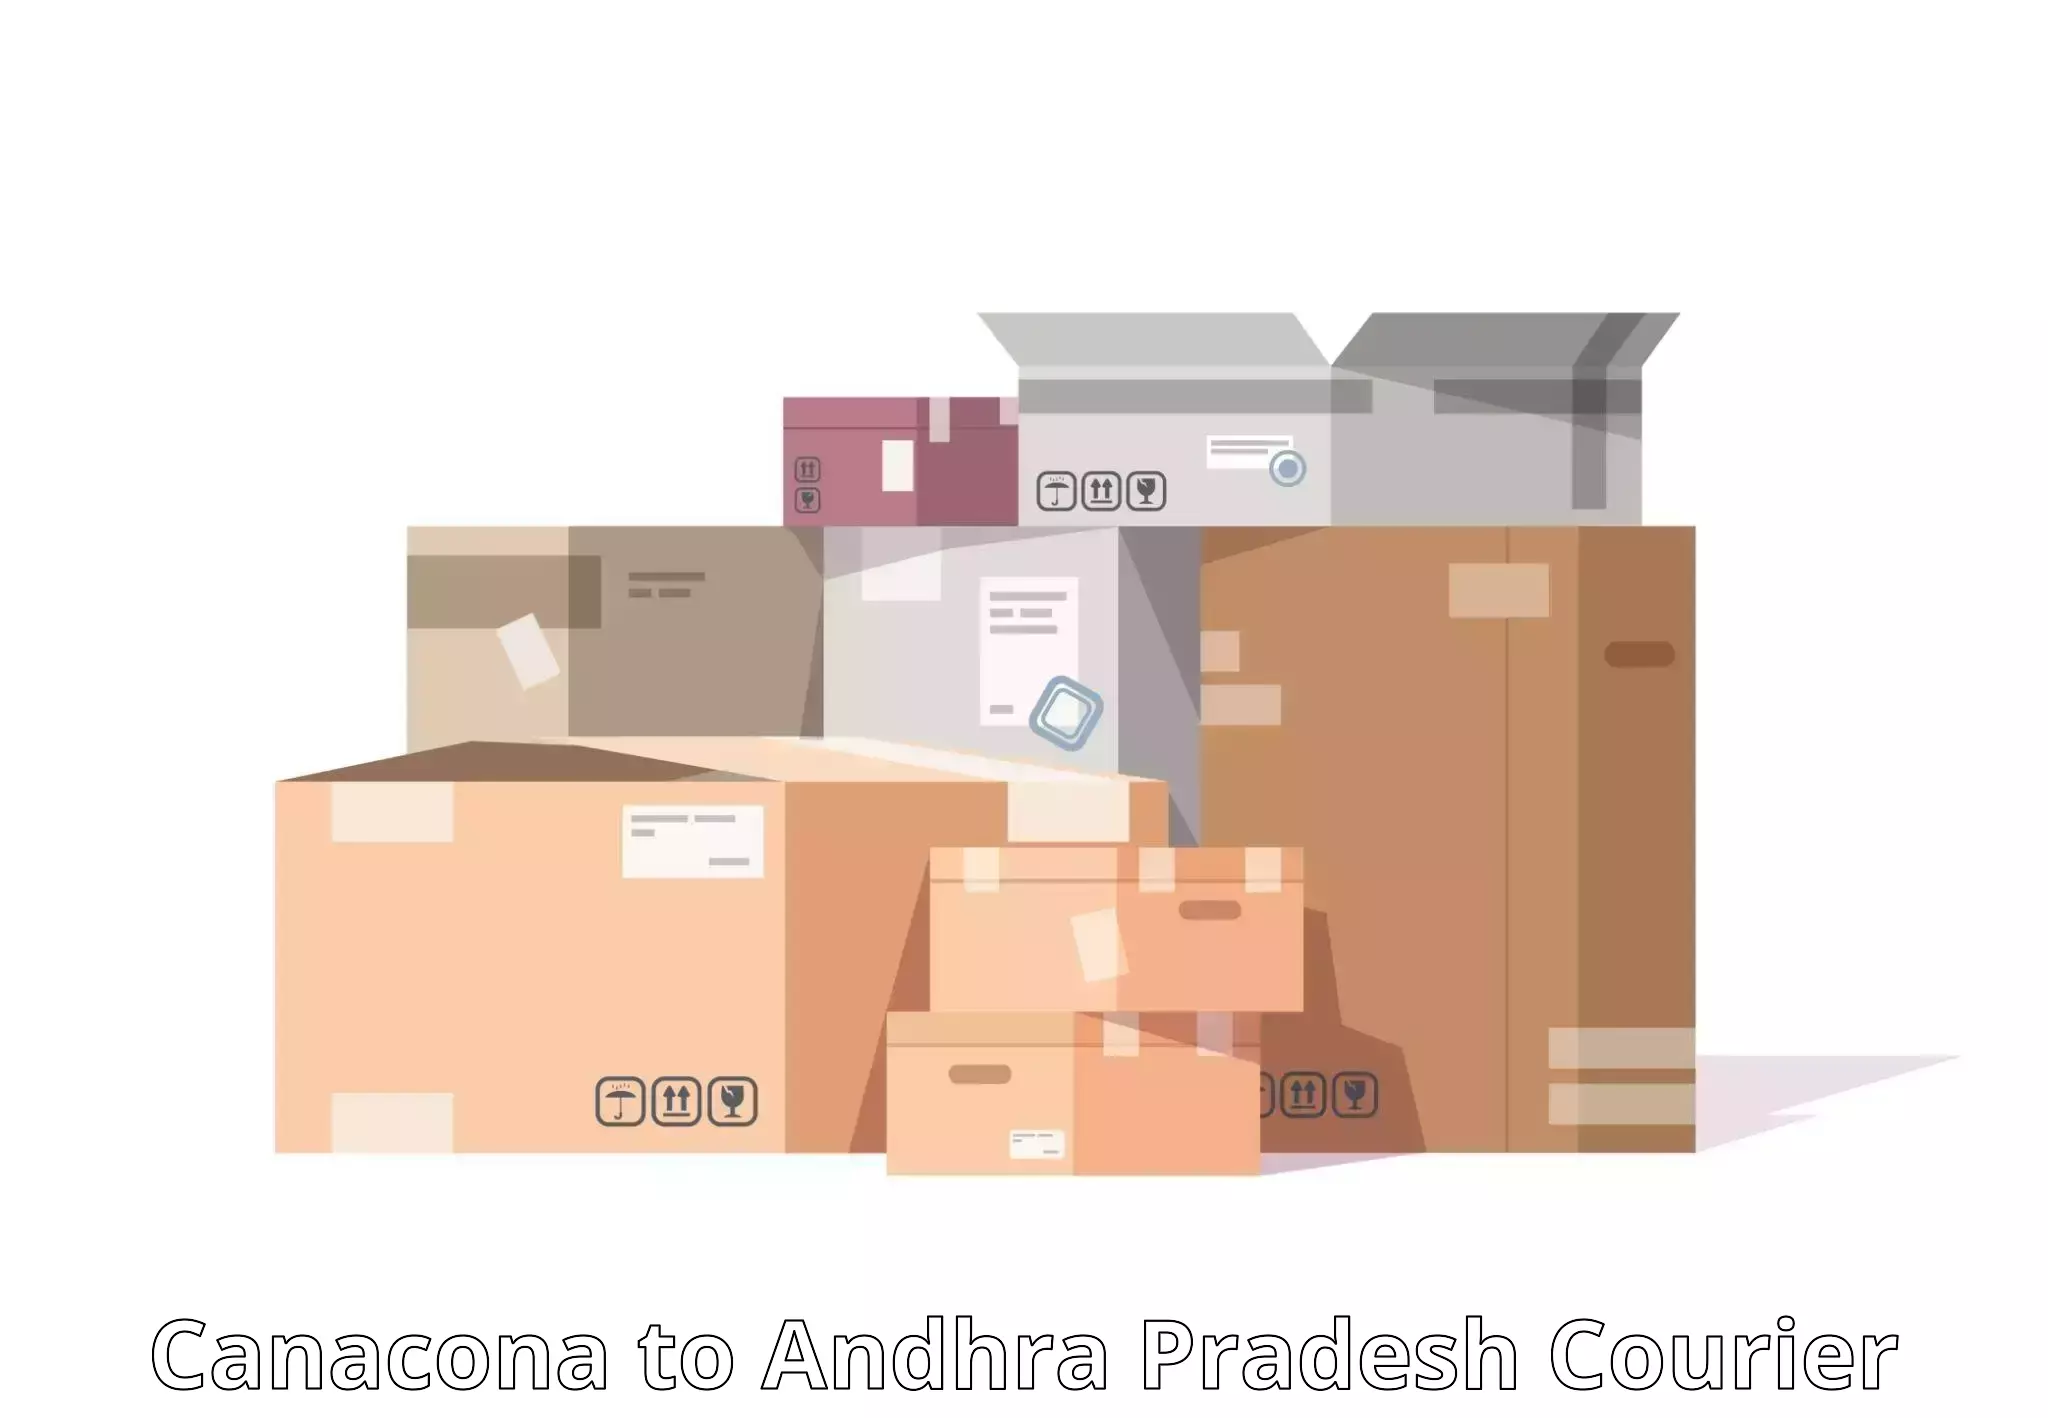 Cash on delivery service Canacona to East Godavari